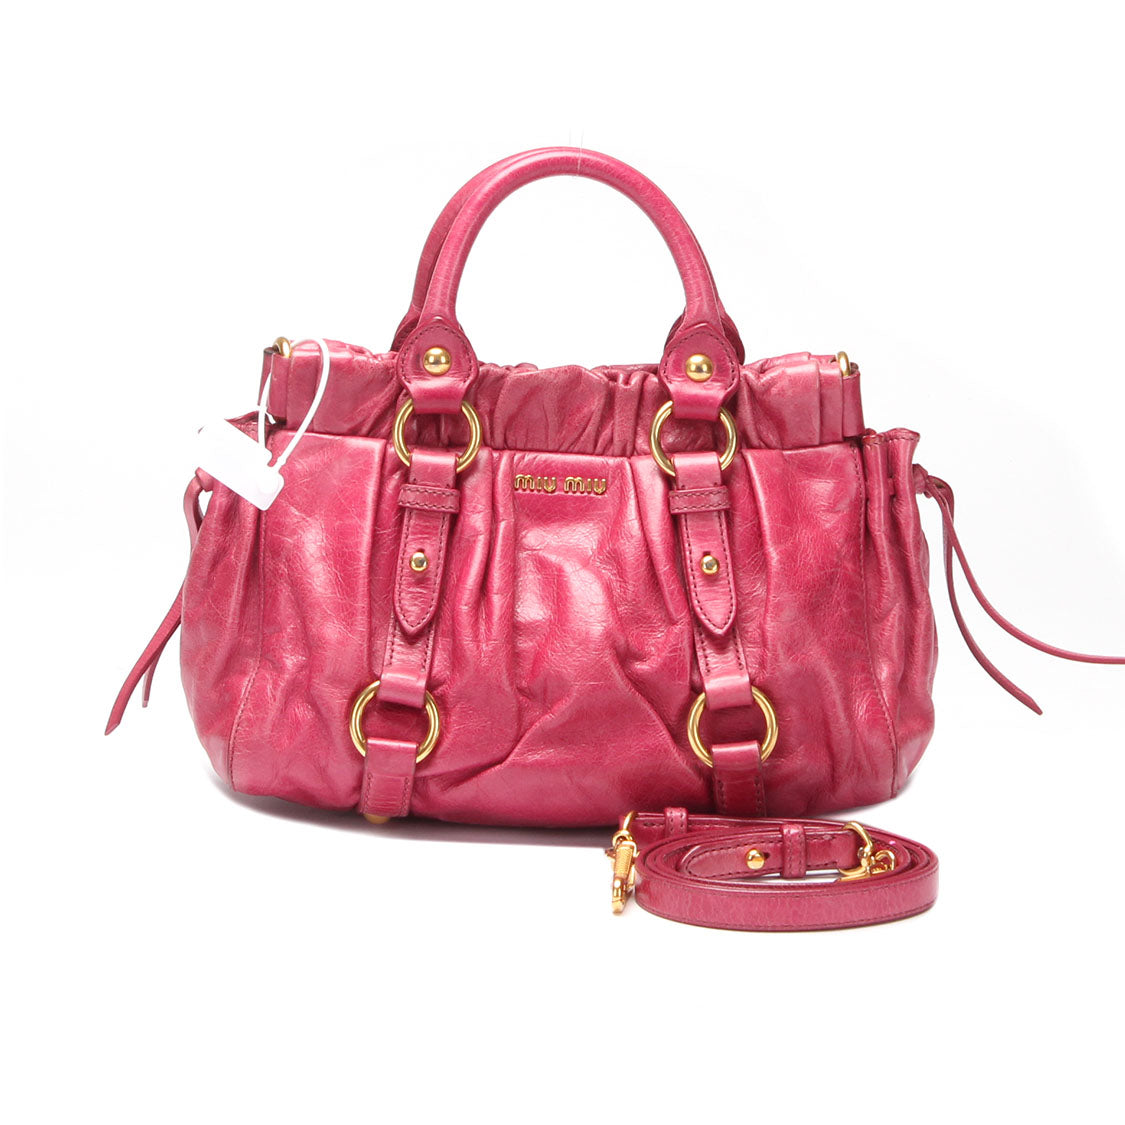 Vitello Lux Gathered Leather Handbag